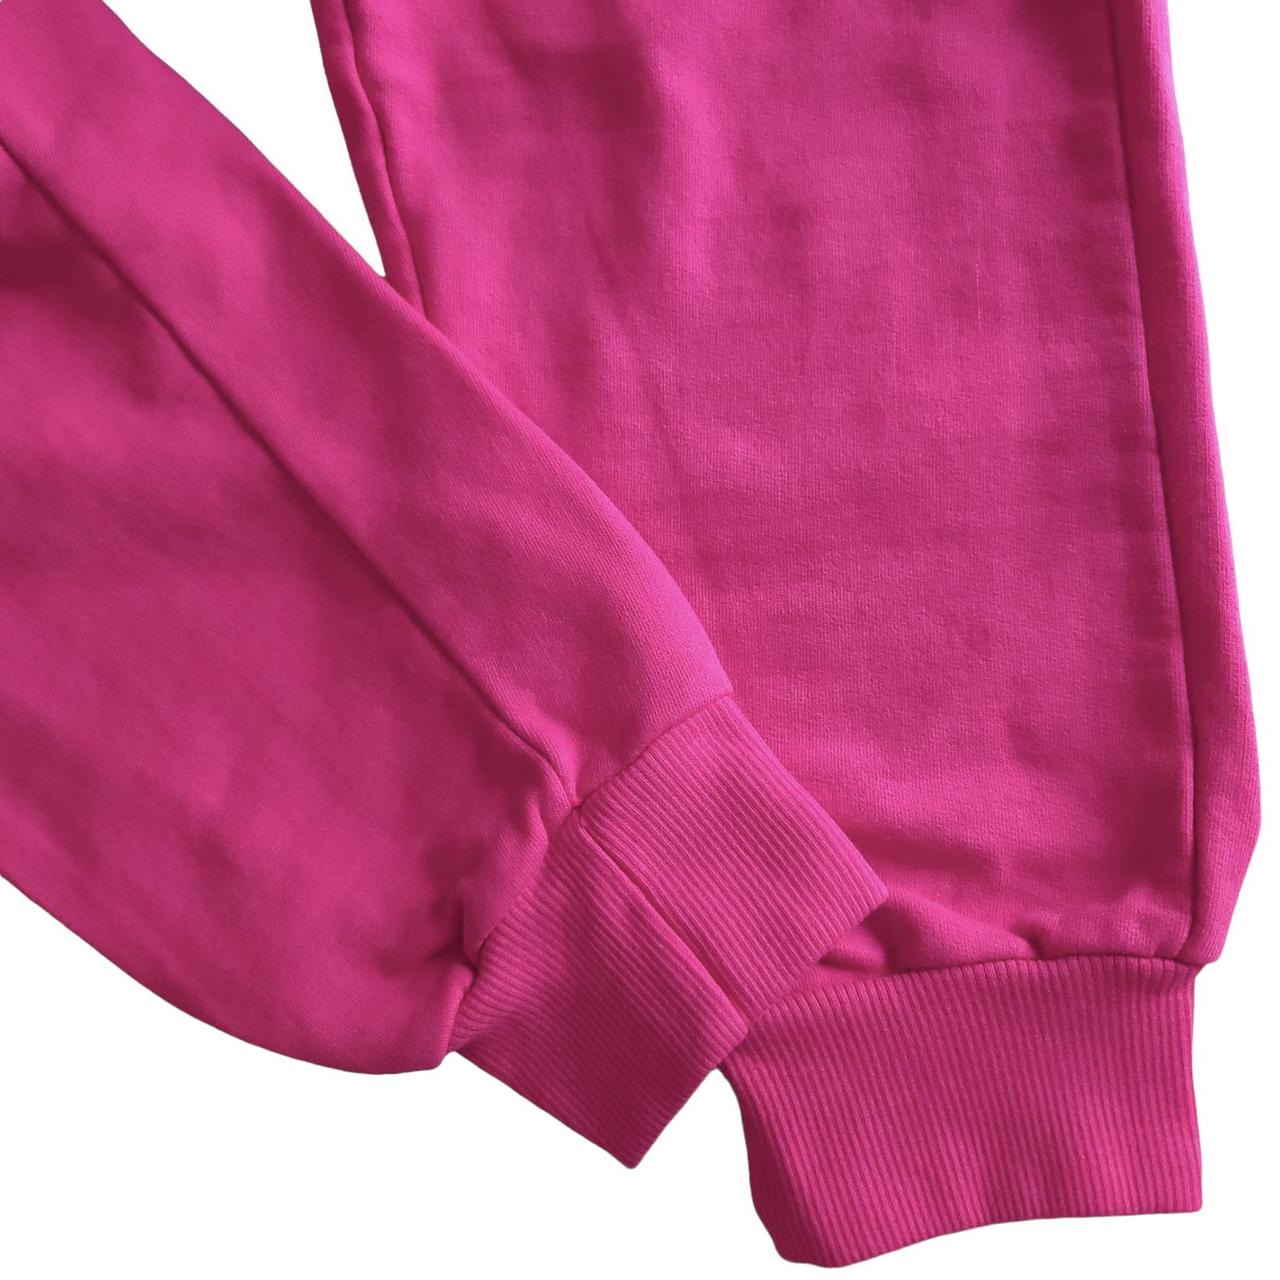 NWT La Detresse Pink Cookies Sweatpants Brand New - Depop